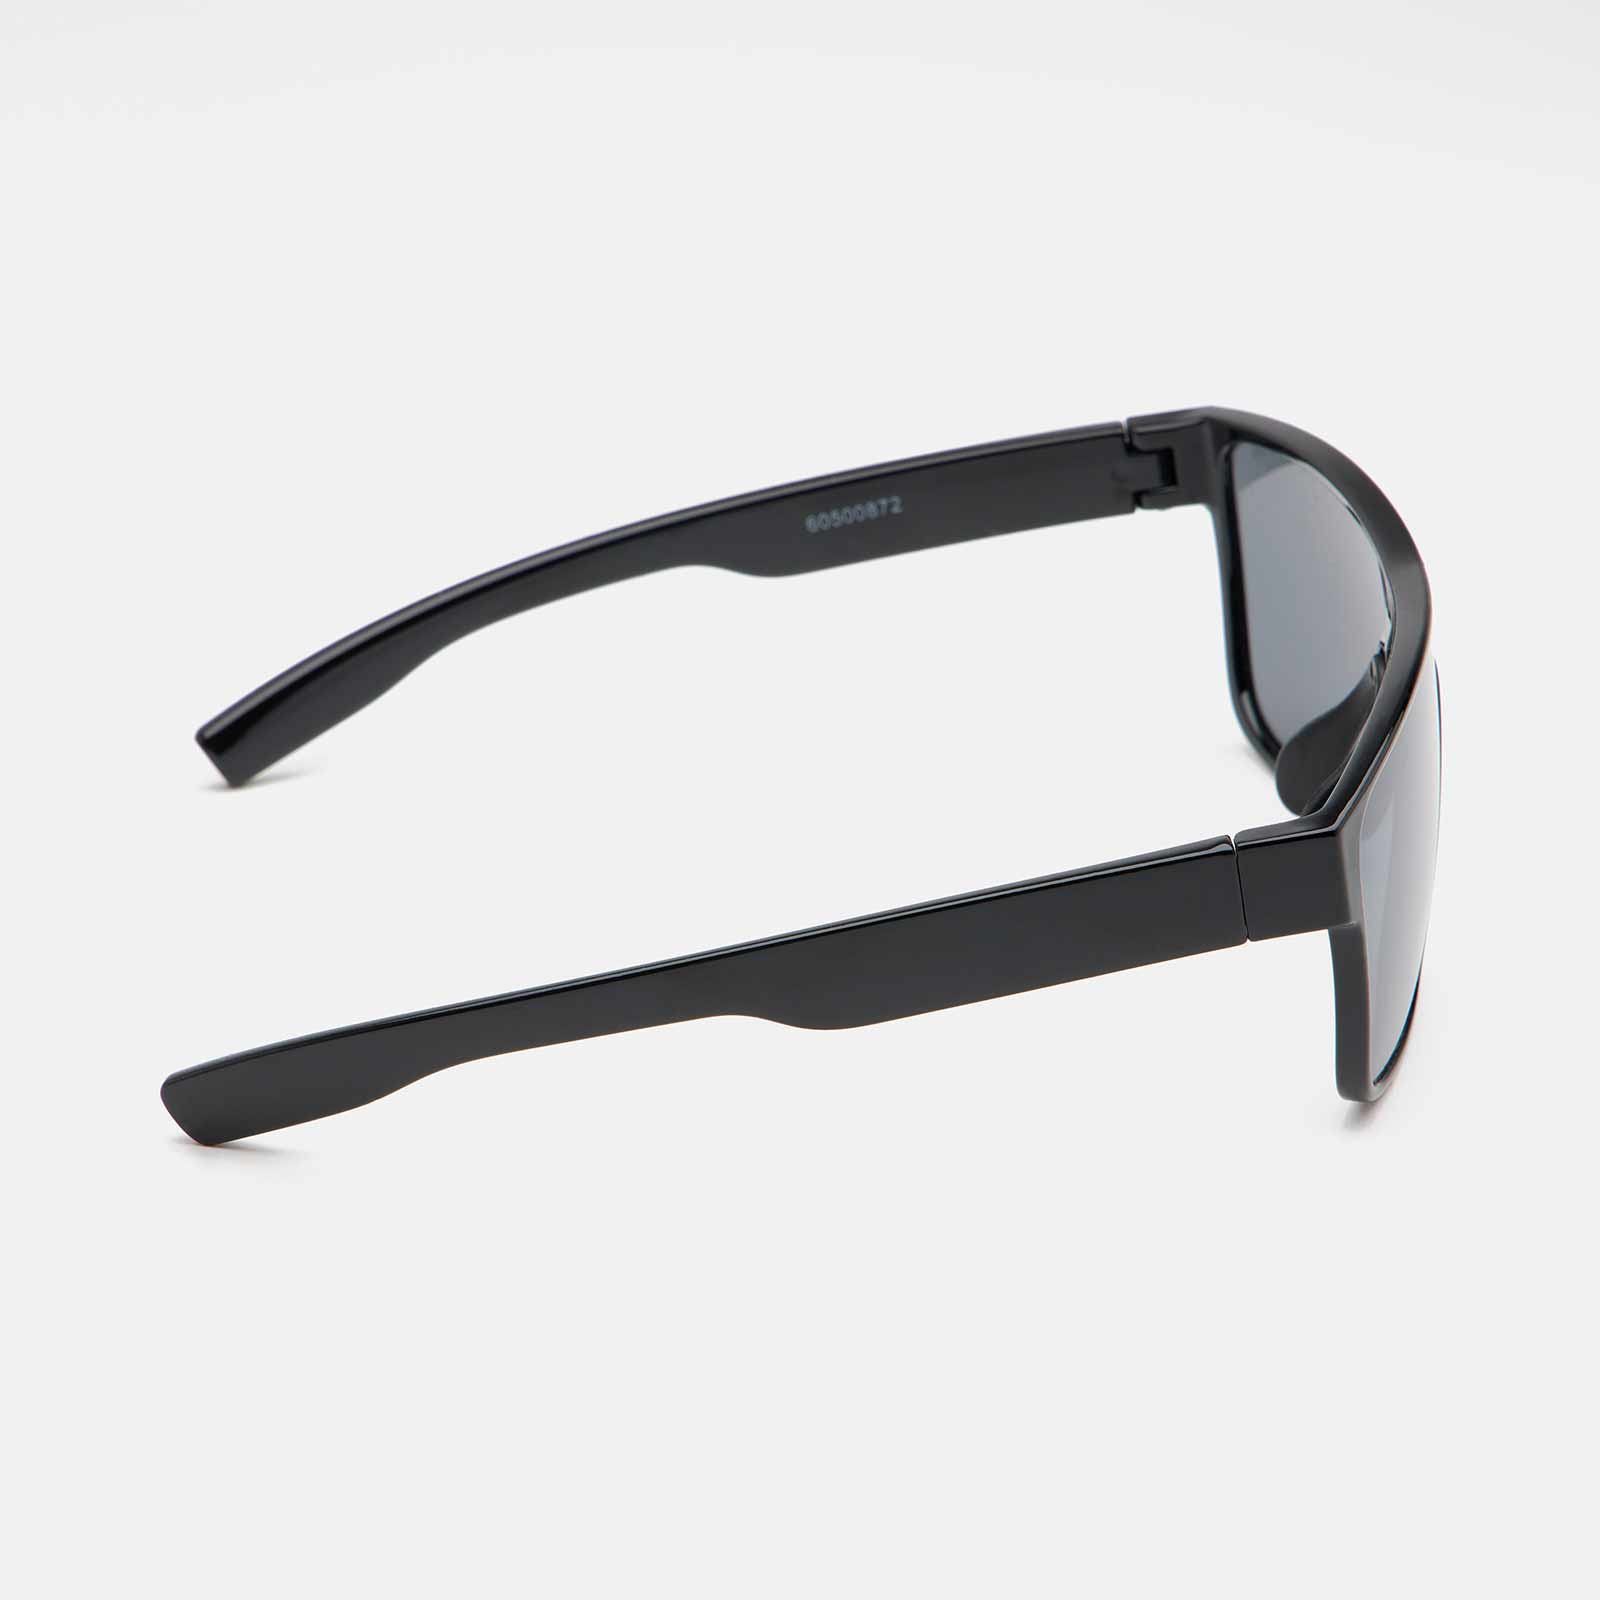 Solglasögon - svart, sport